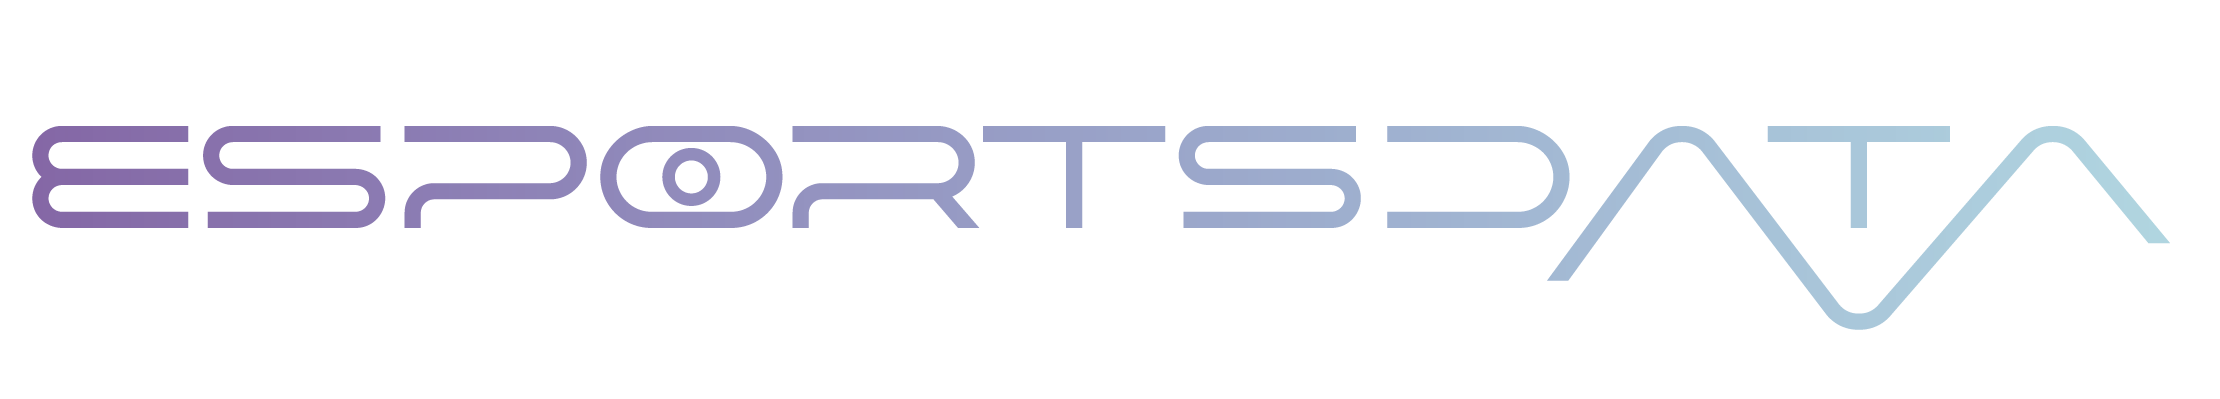 Esportsdata logo